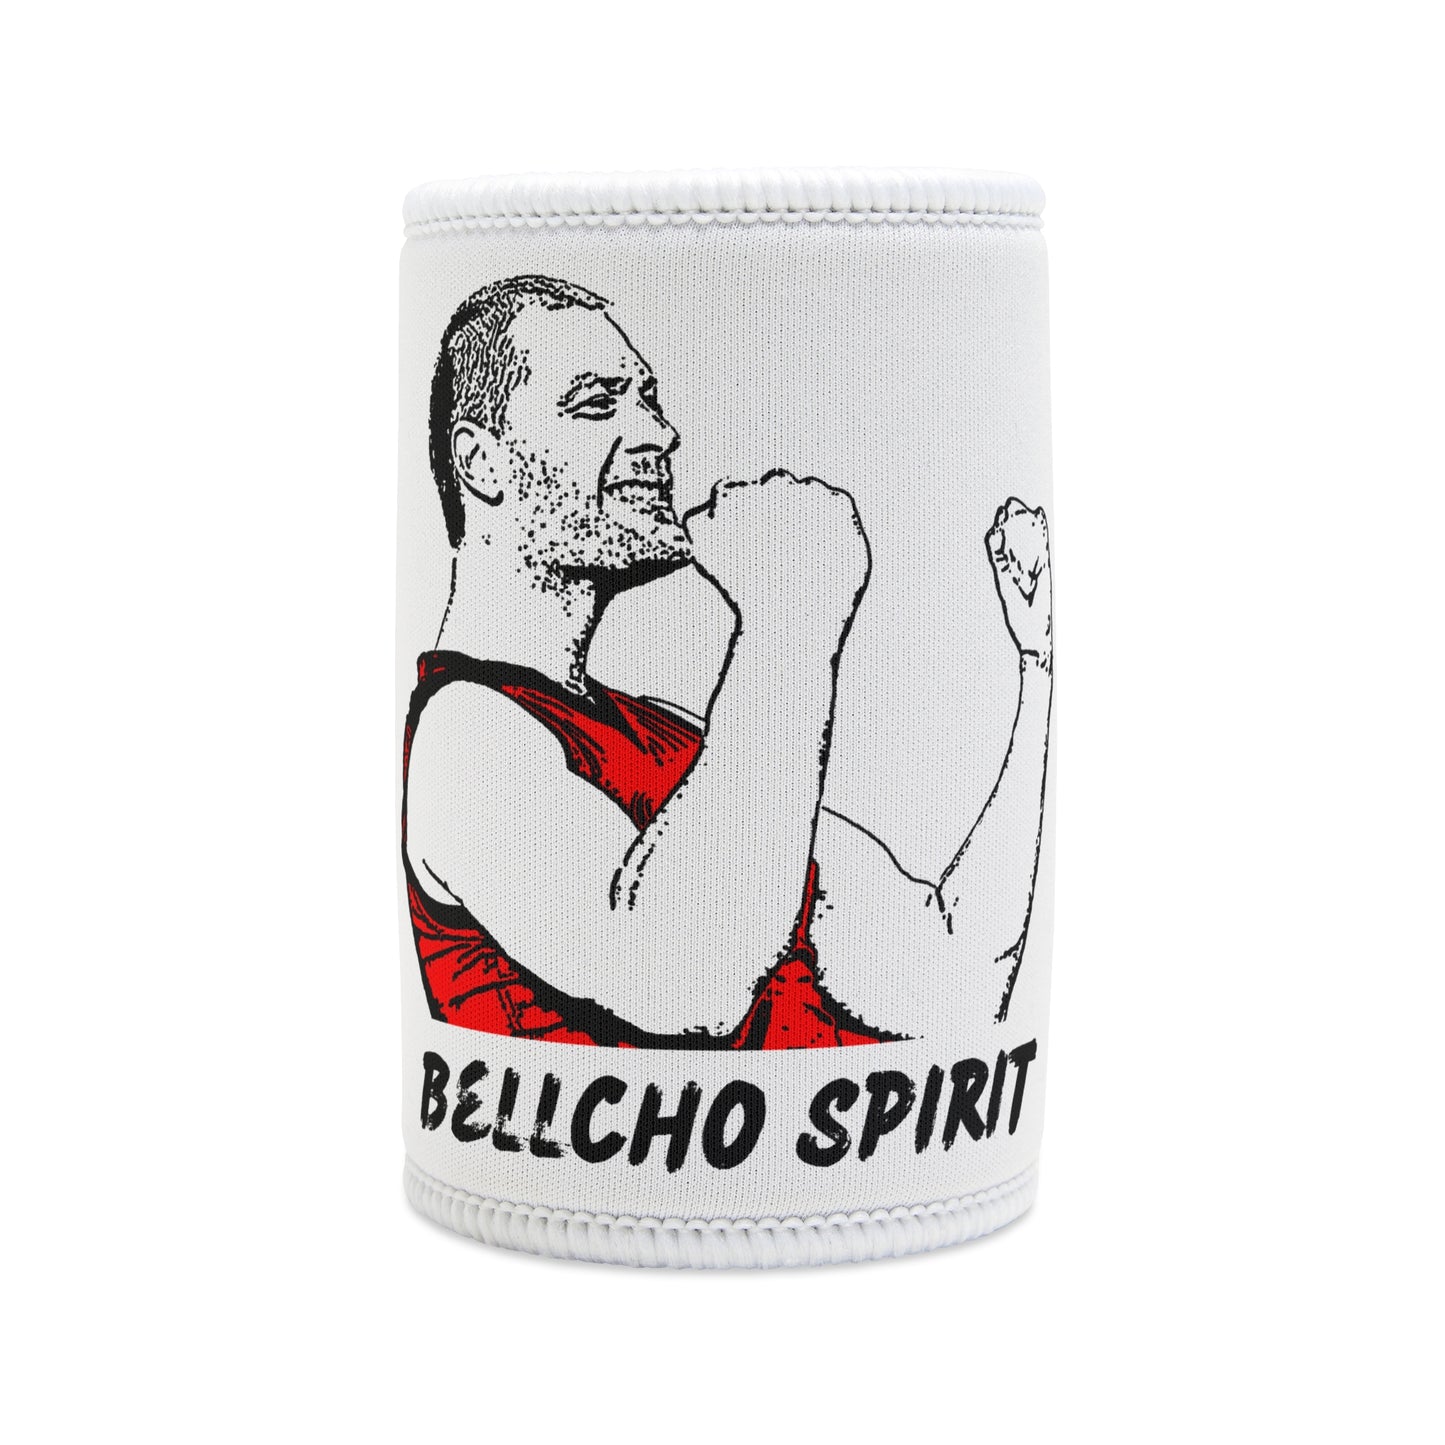 Bellcho Spirit Stubby Cooler